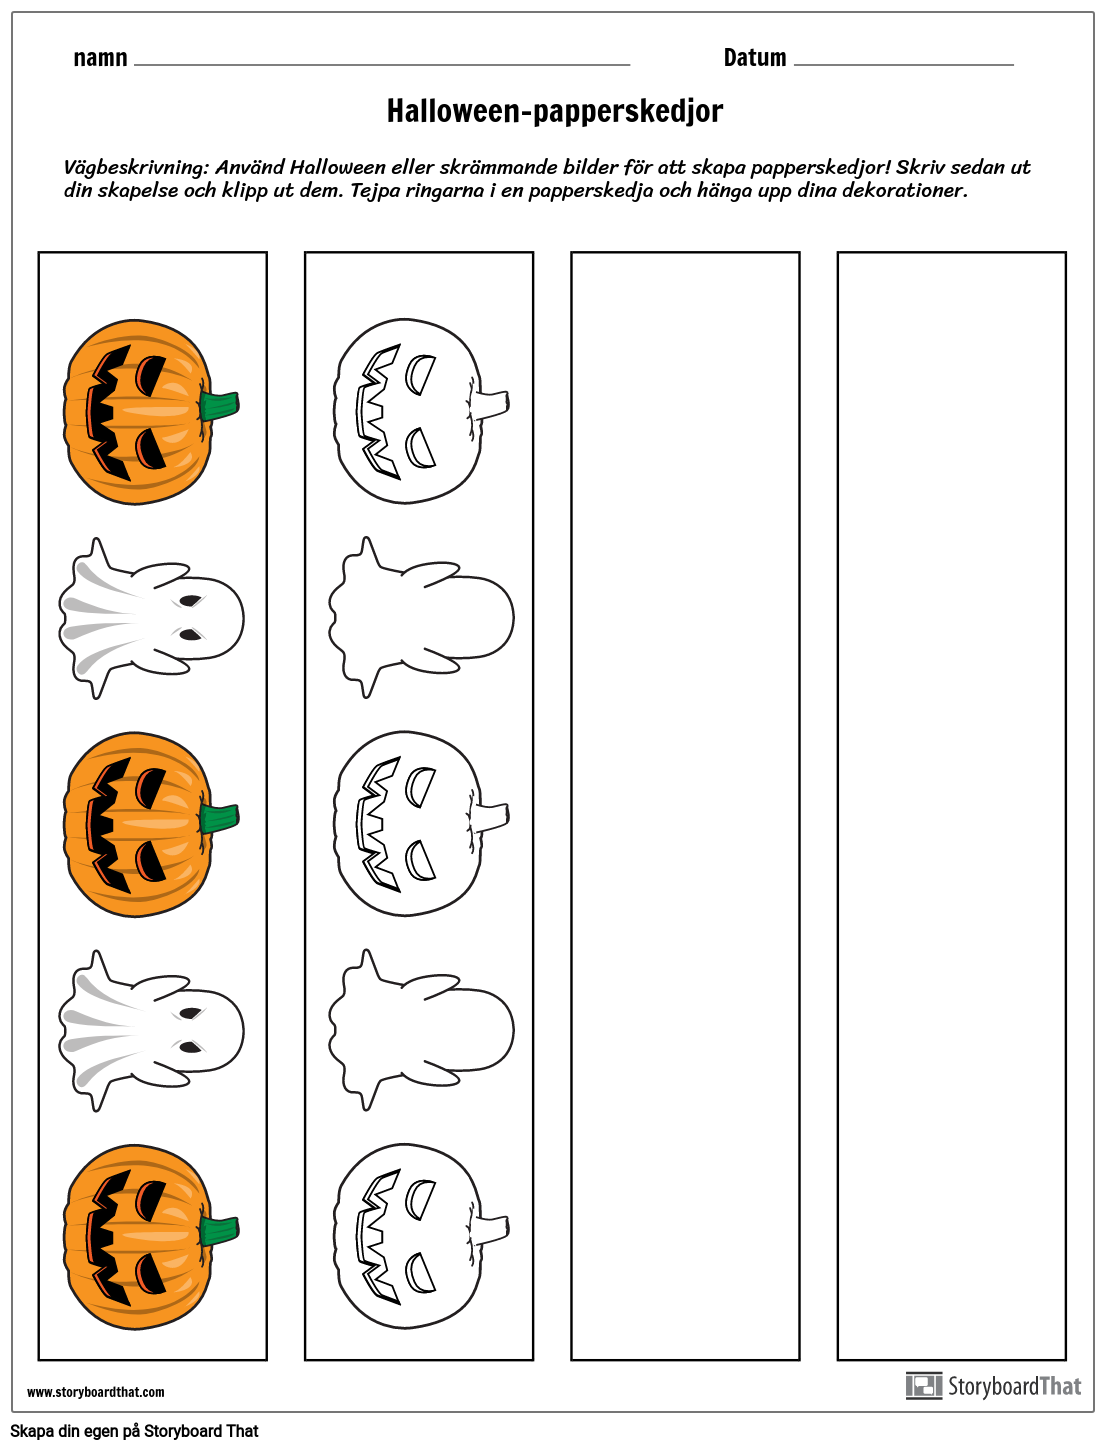 halloween-papperskedjor-storyboard-von-sv-examples